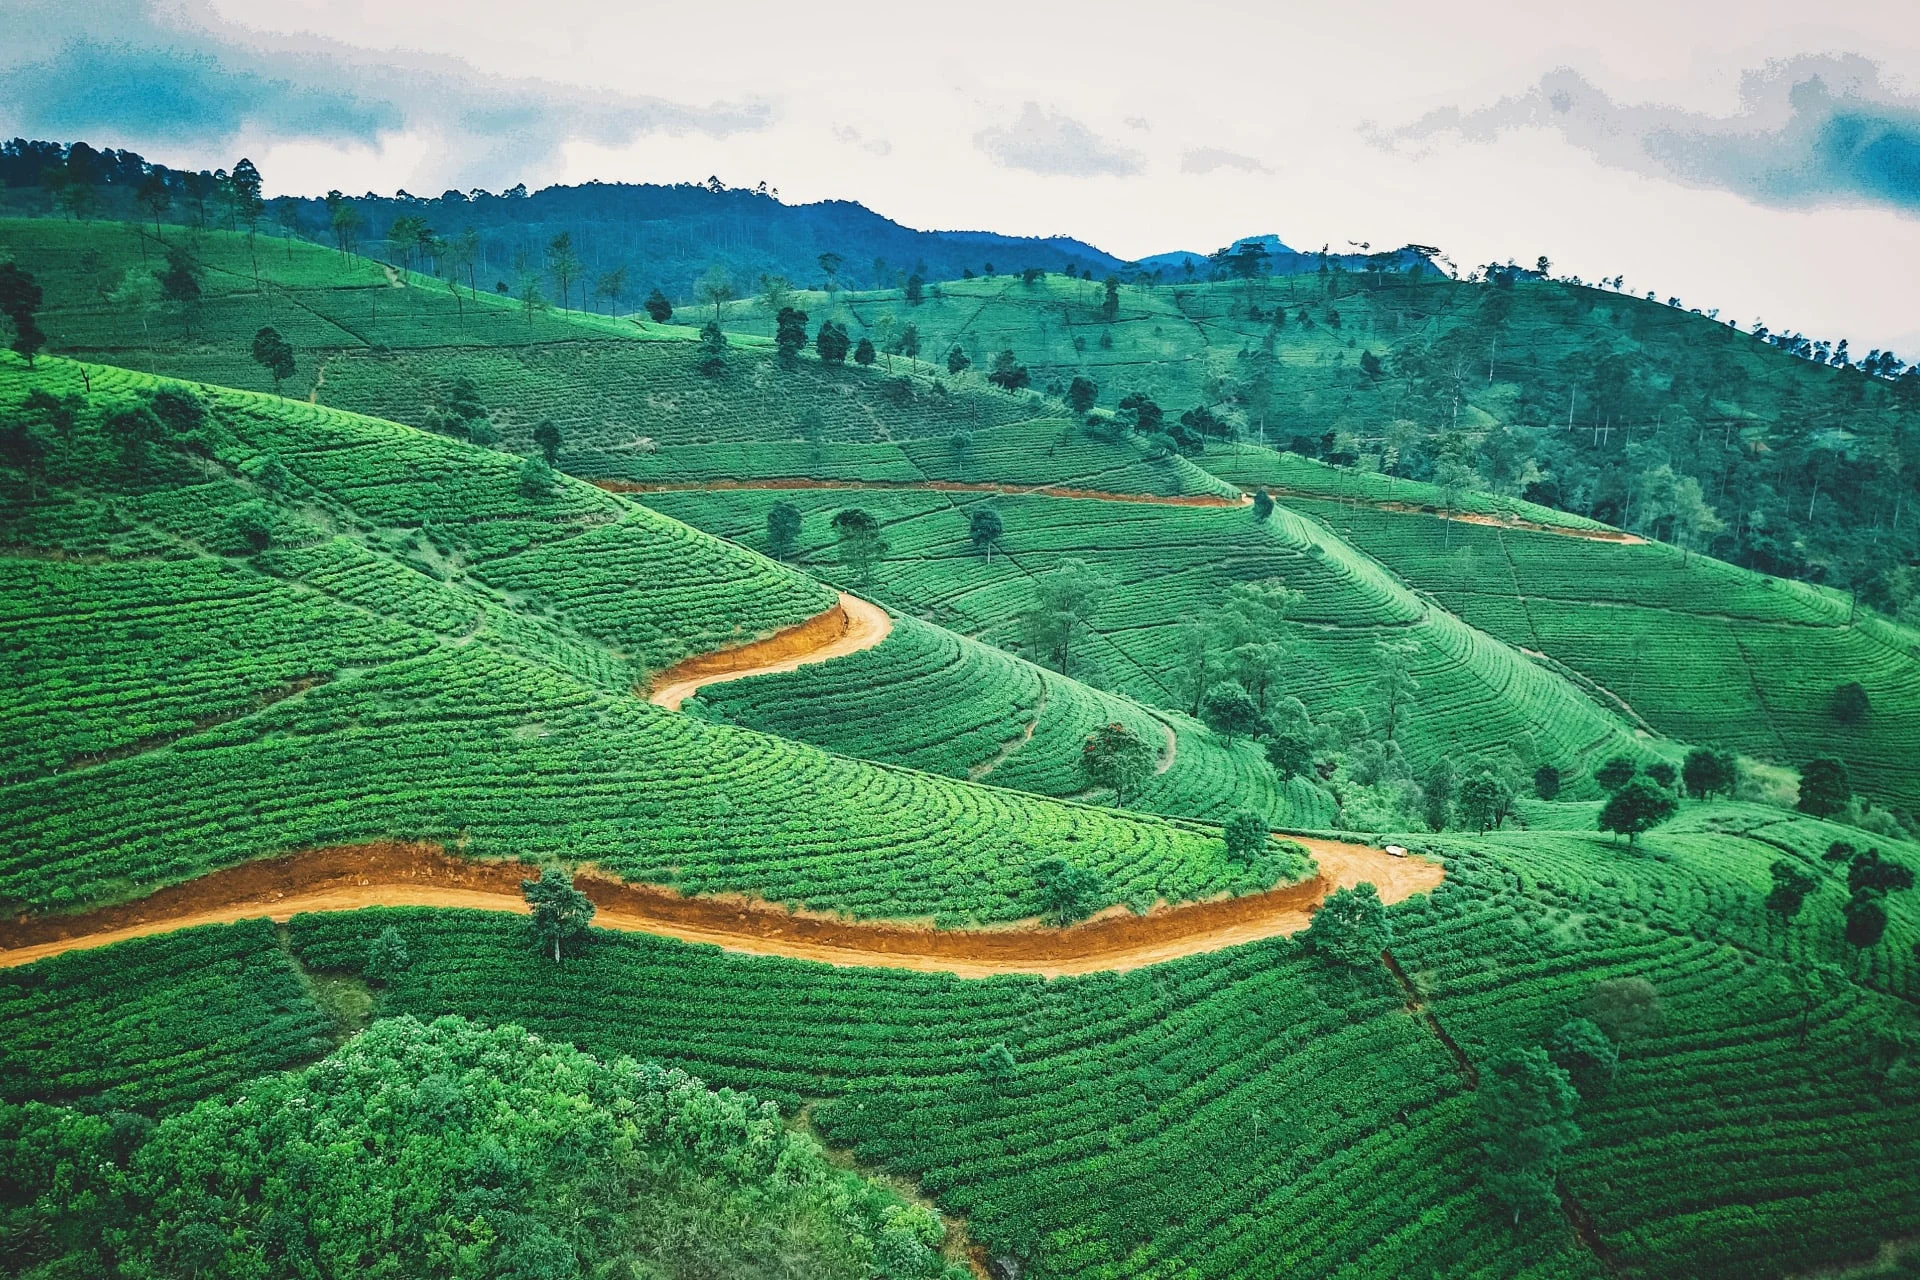 An aerial view of a tea plantation in sri lanka.